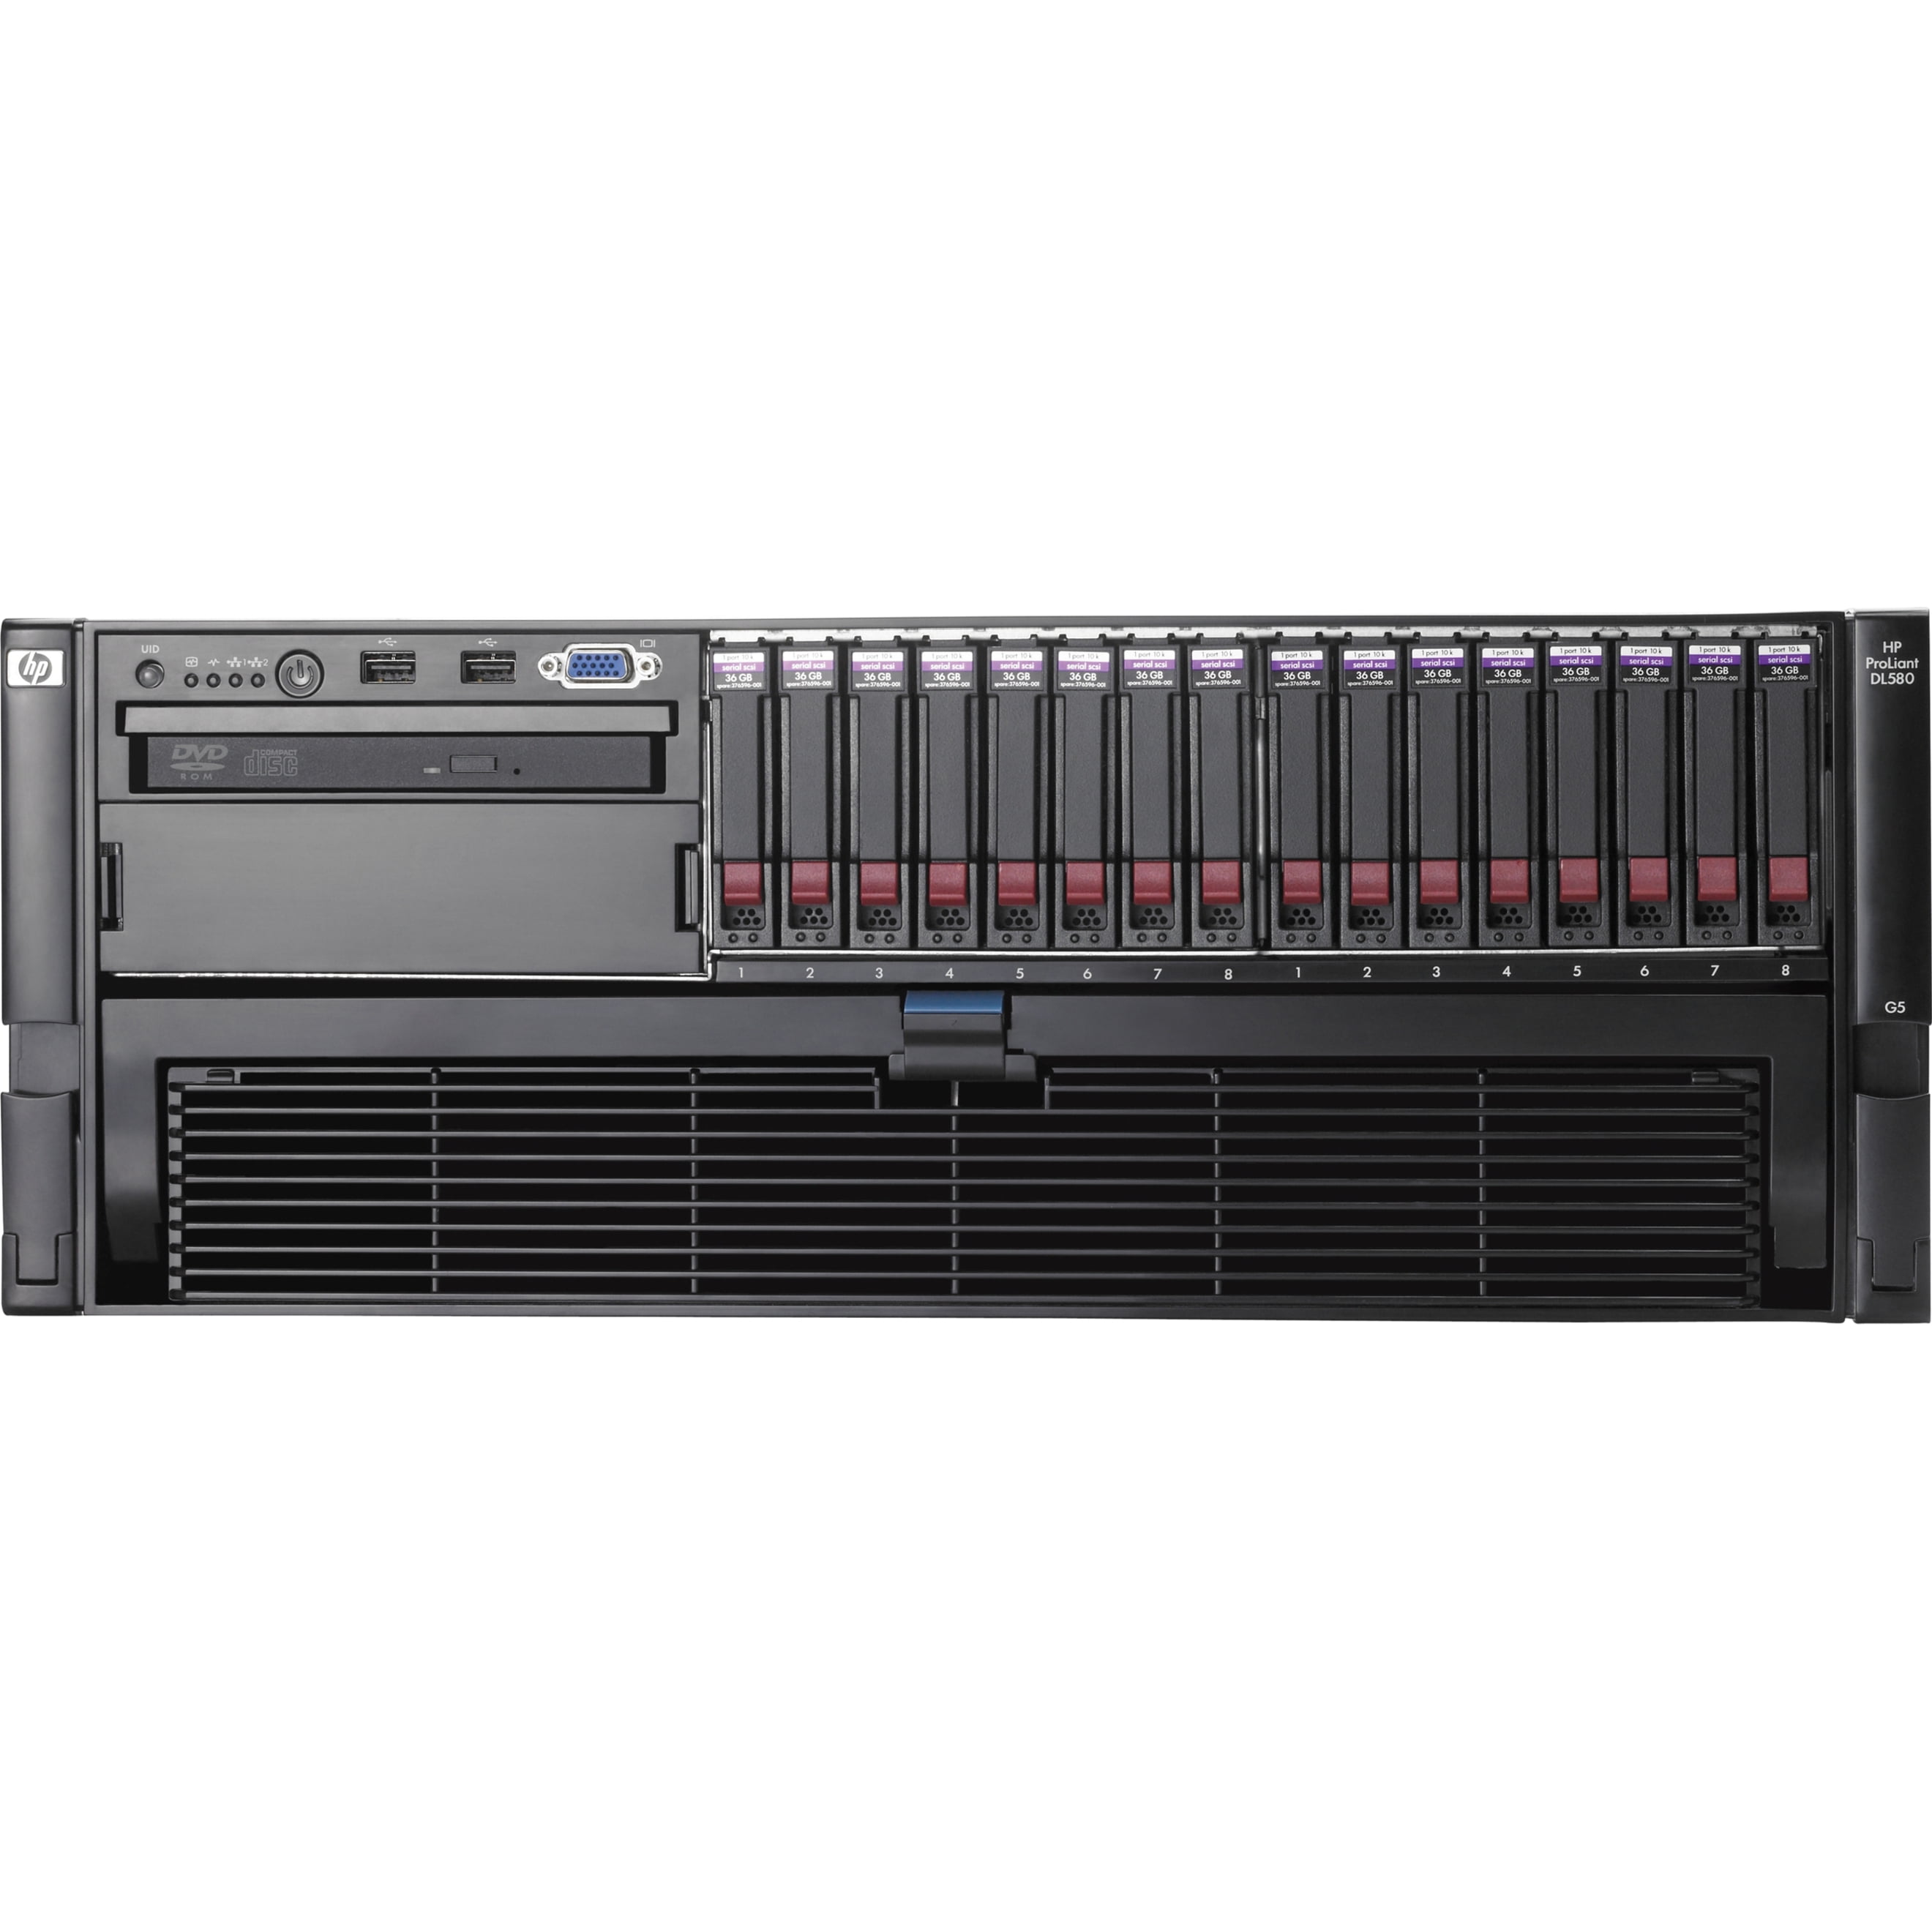 Server HP ProLiant ml310 g5p Core 2 QUAD q9400 2,66ghz 4x146gb SAS 8gb di RAM DVDRW 